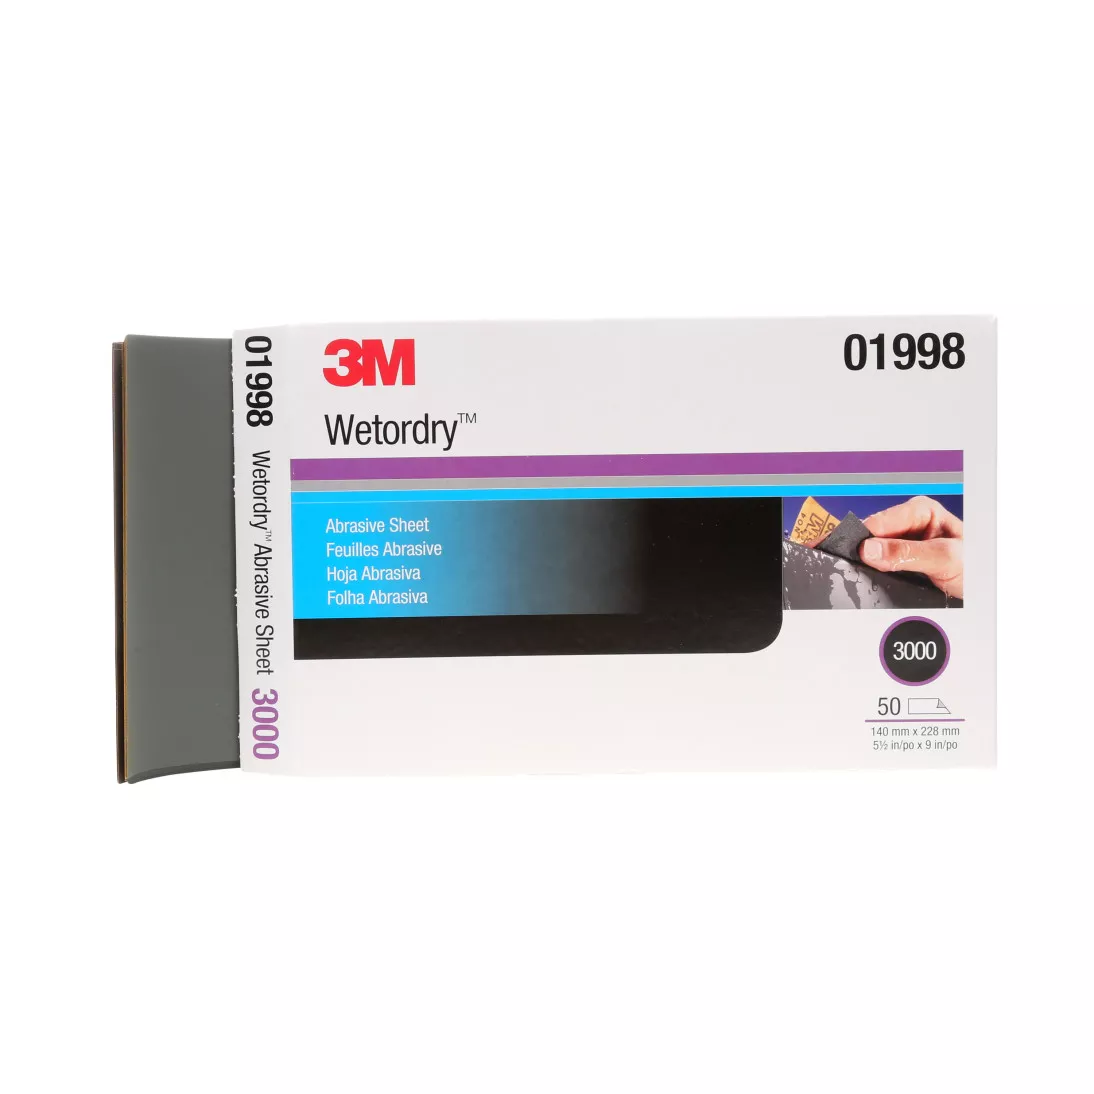 3M™ Wetordry™ Abrasive Sheet 401Q, 01998, 3000, 5 1/2 x 9 in, 50 sheets
per carton, 5 cartons per case